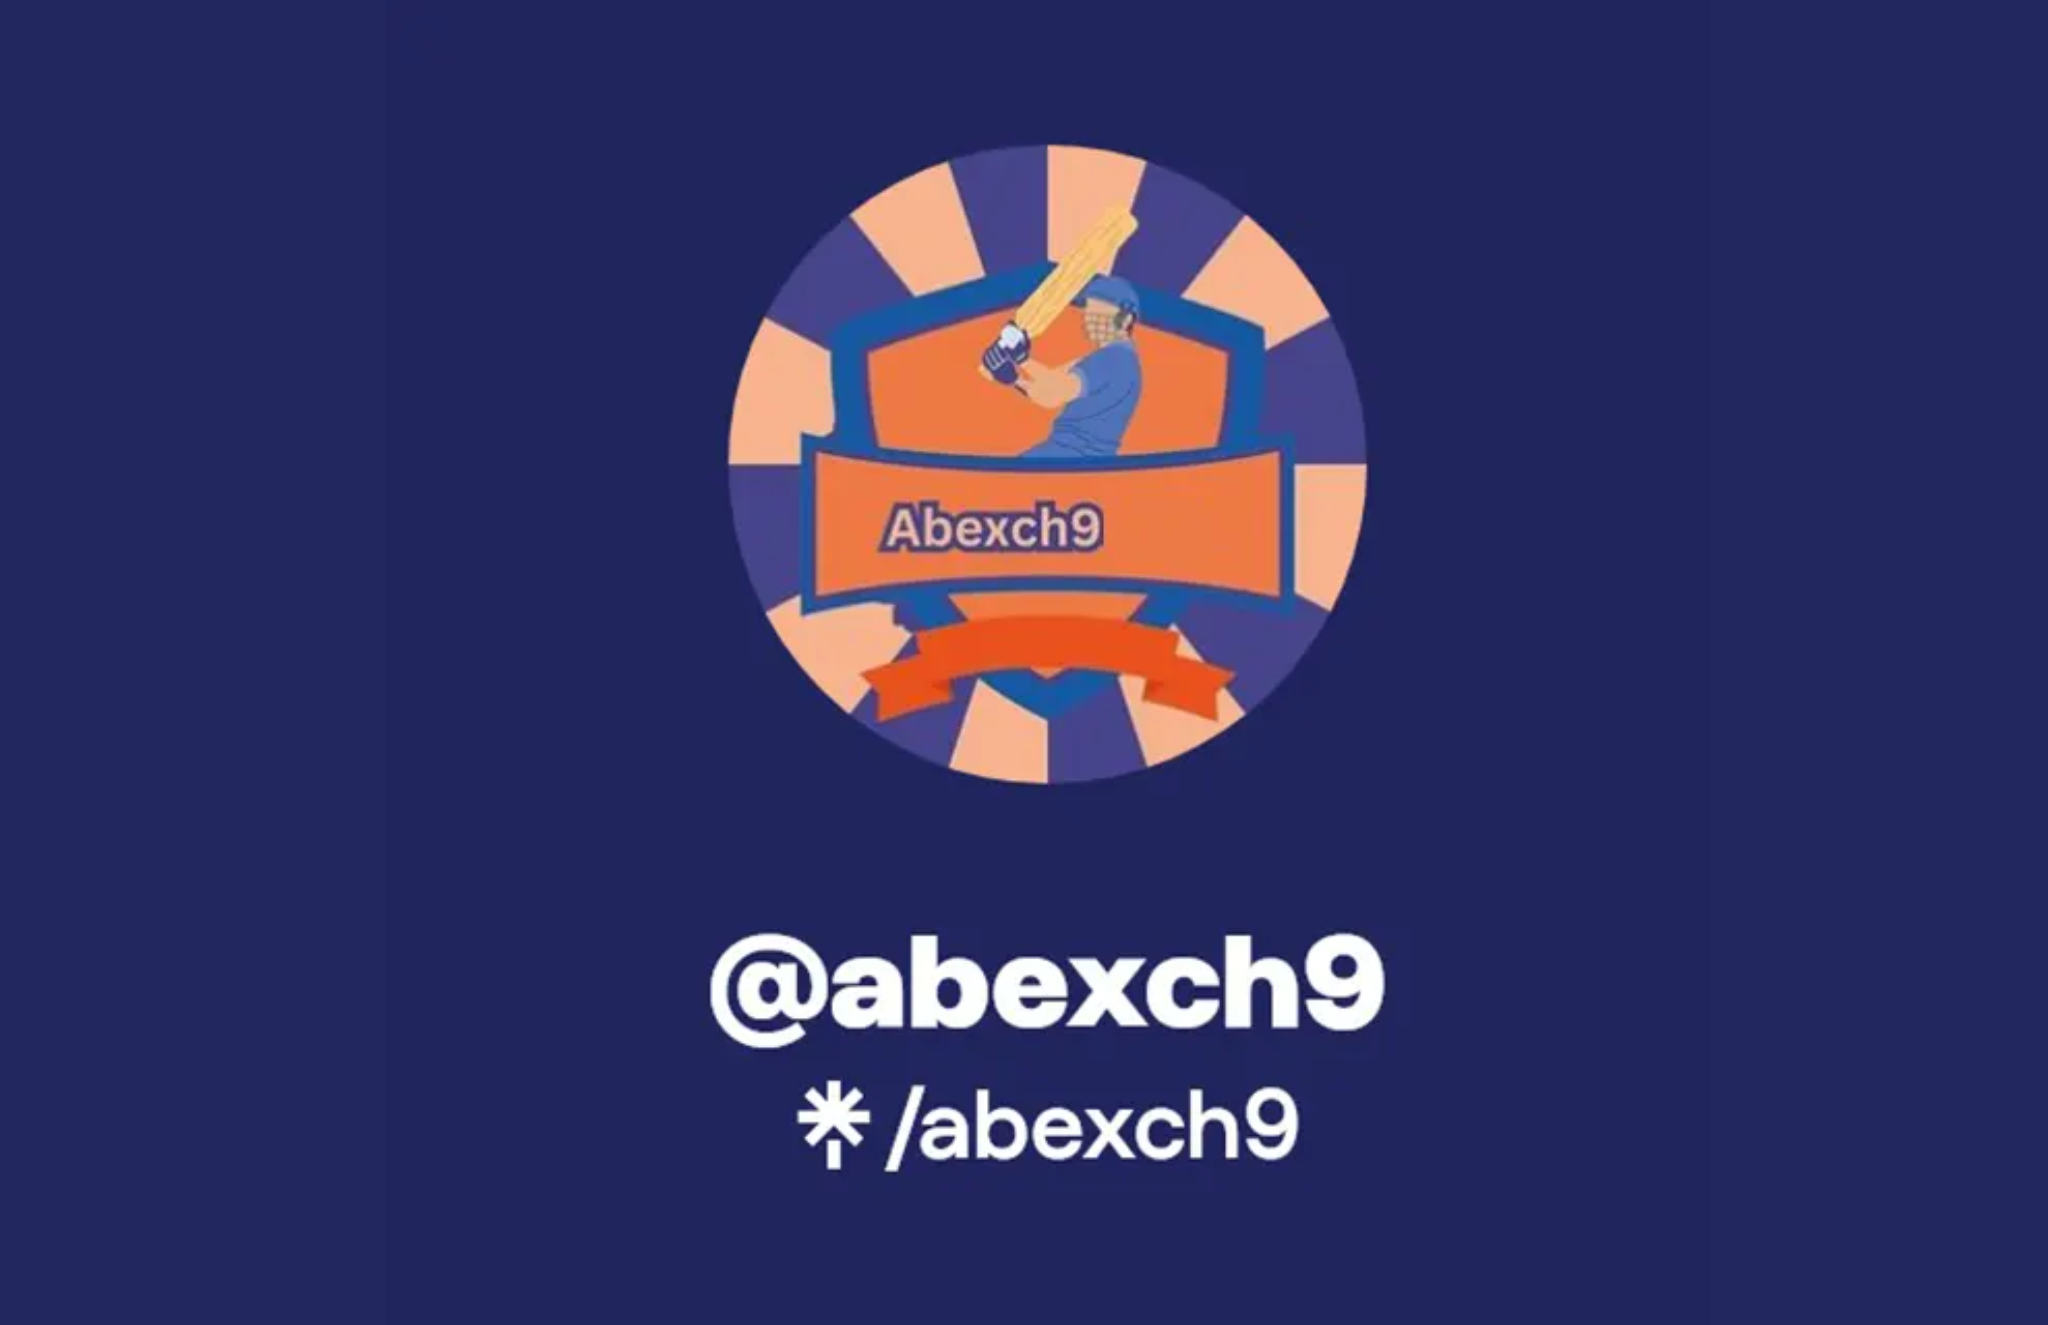 Abexch9